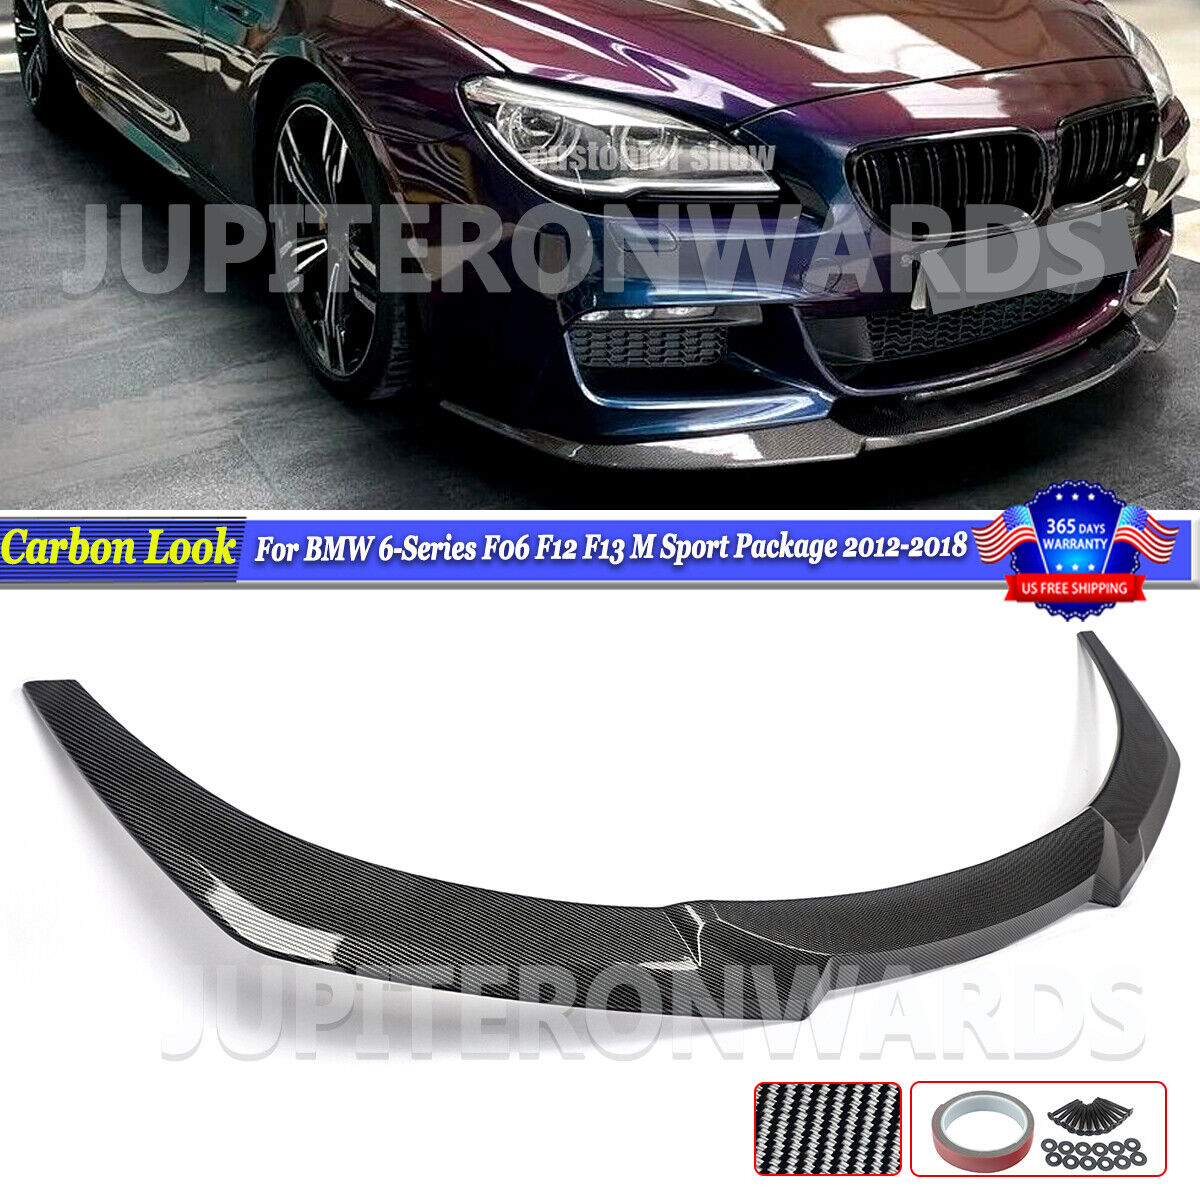 For BMW F06 F12 F13 M Sport 650i 2012-2019 Carbon Look Front Splitter Bumper Lip